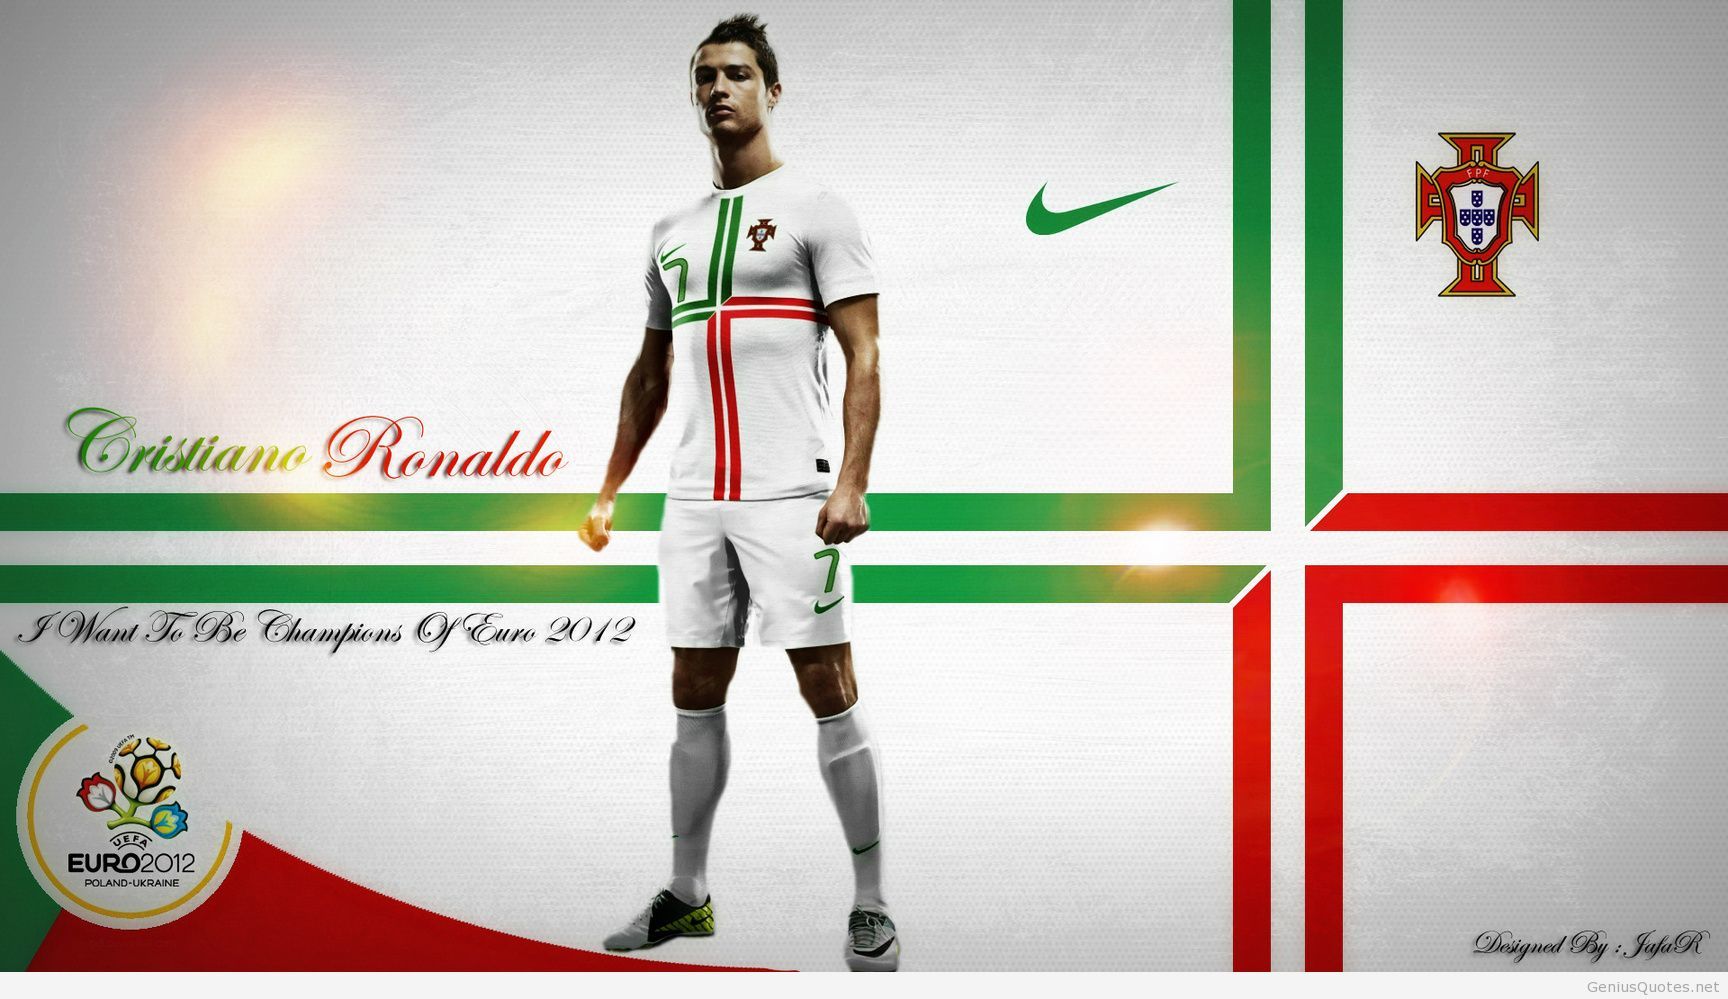 Cristiano Ronaldo Fifa World Cup 2014 Portugal Wallpapers Hd